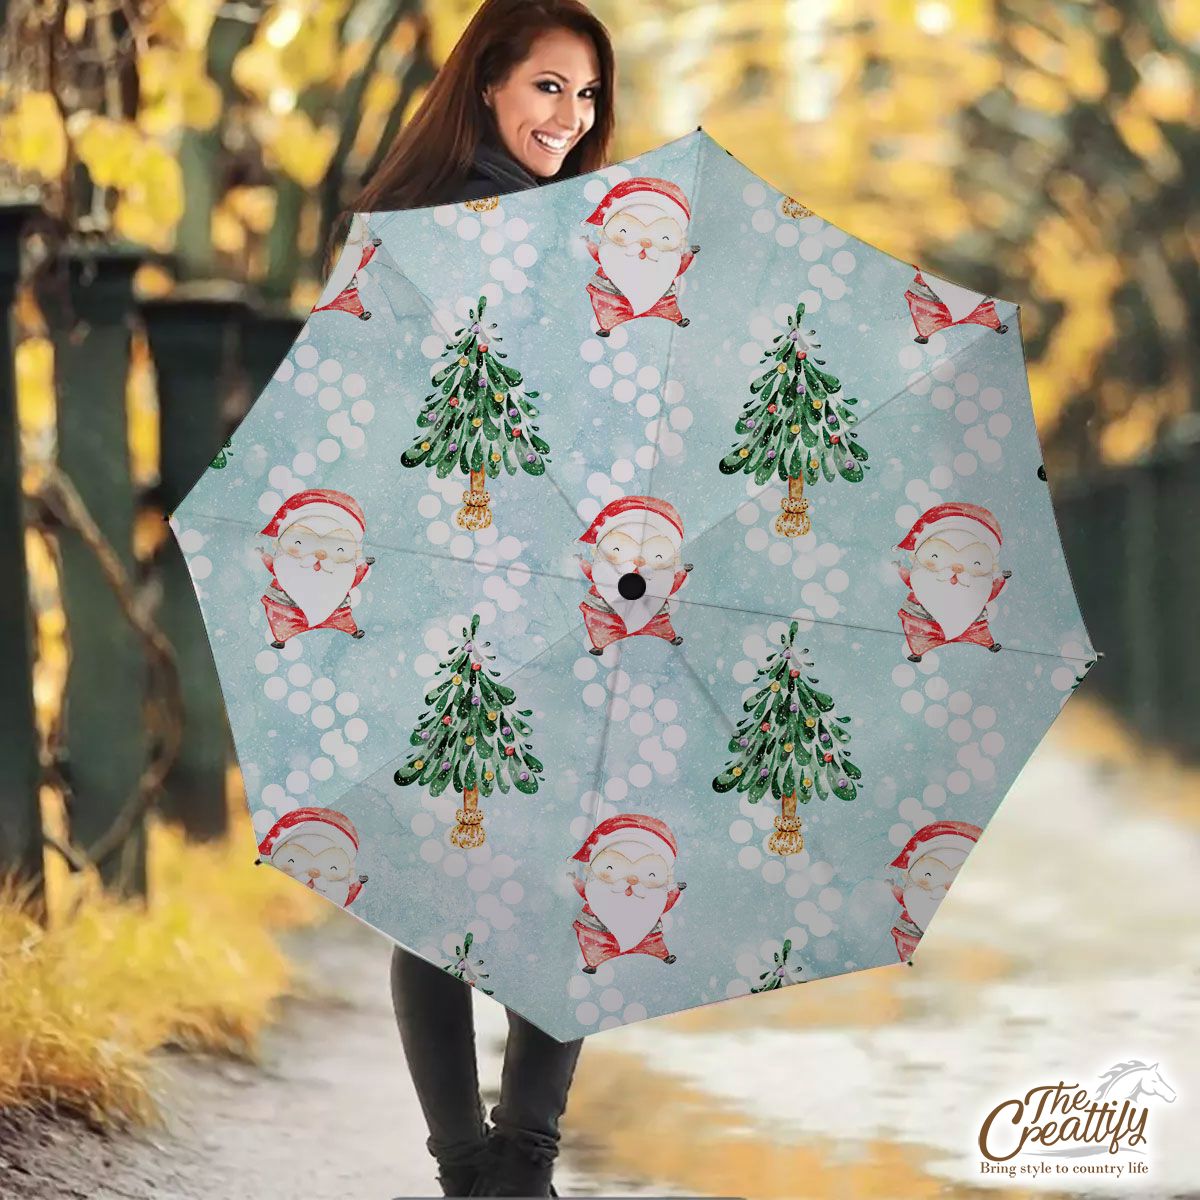 Santa Clause And Christmas Tree On Snowflake Background Umbrella